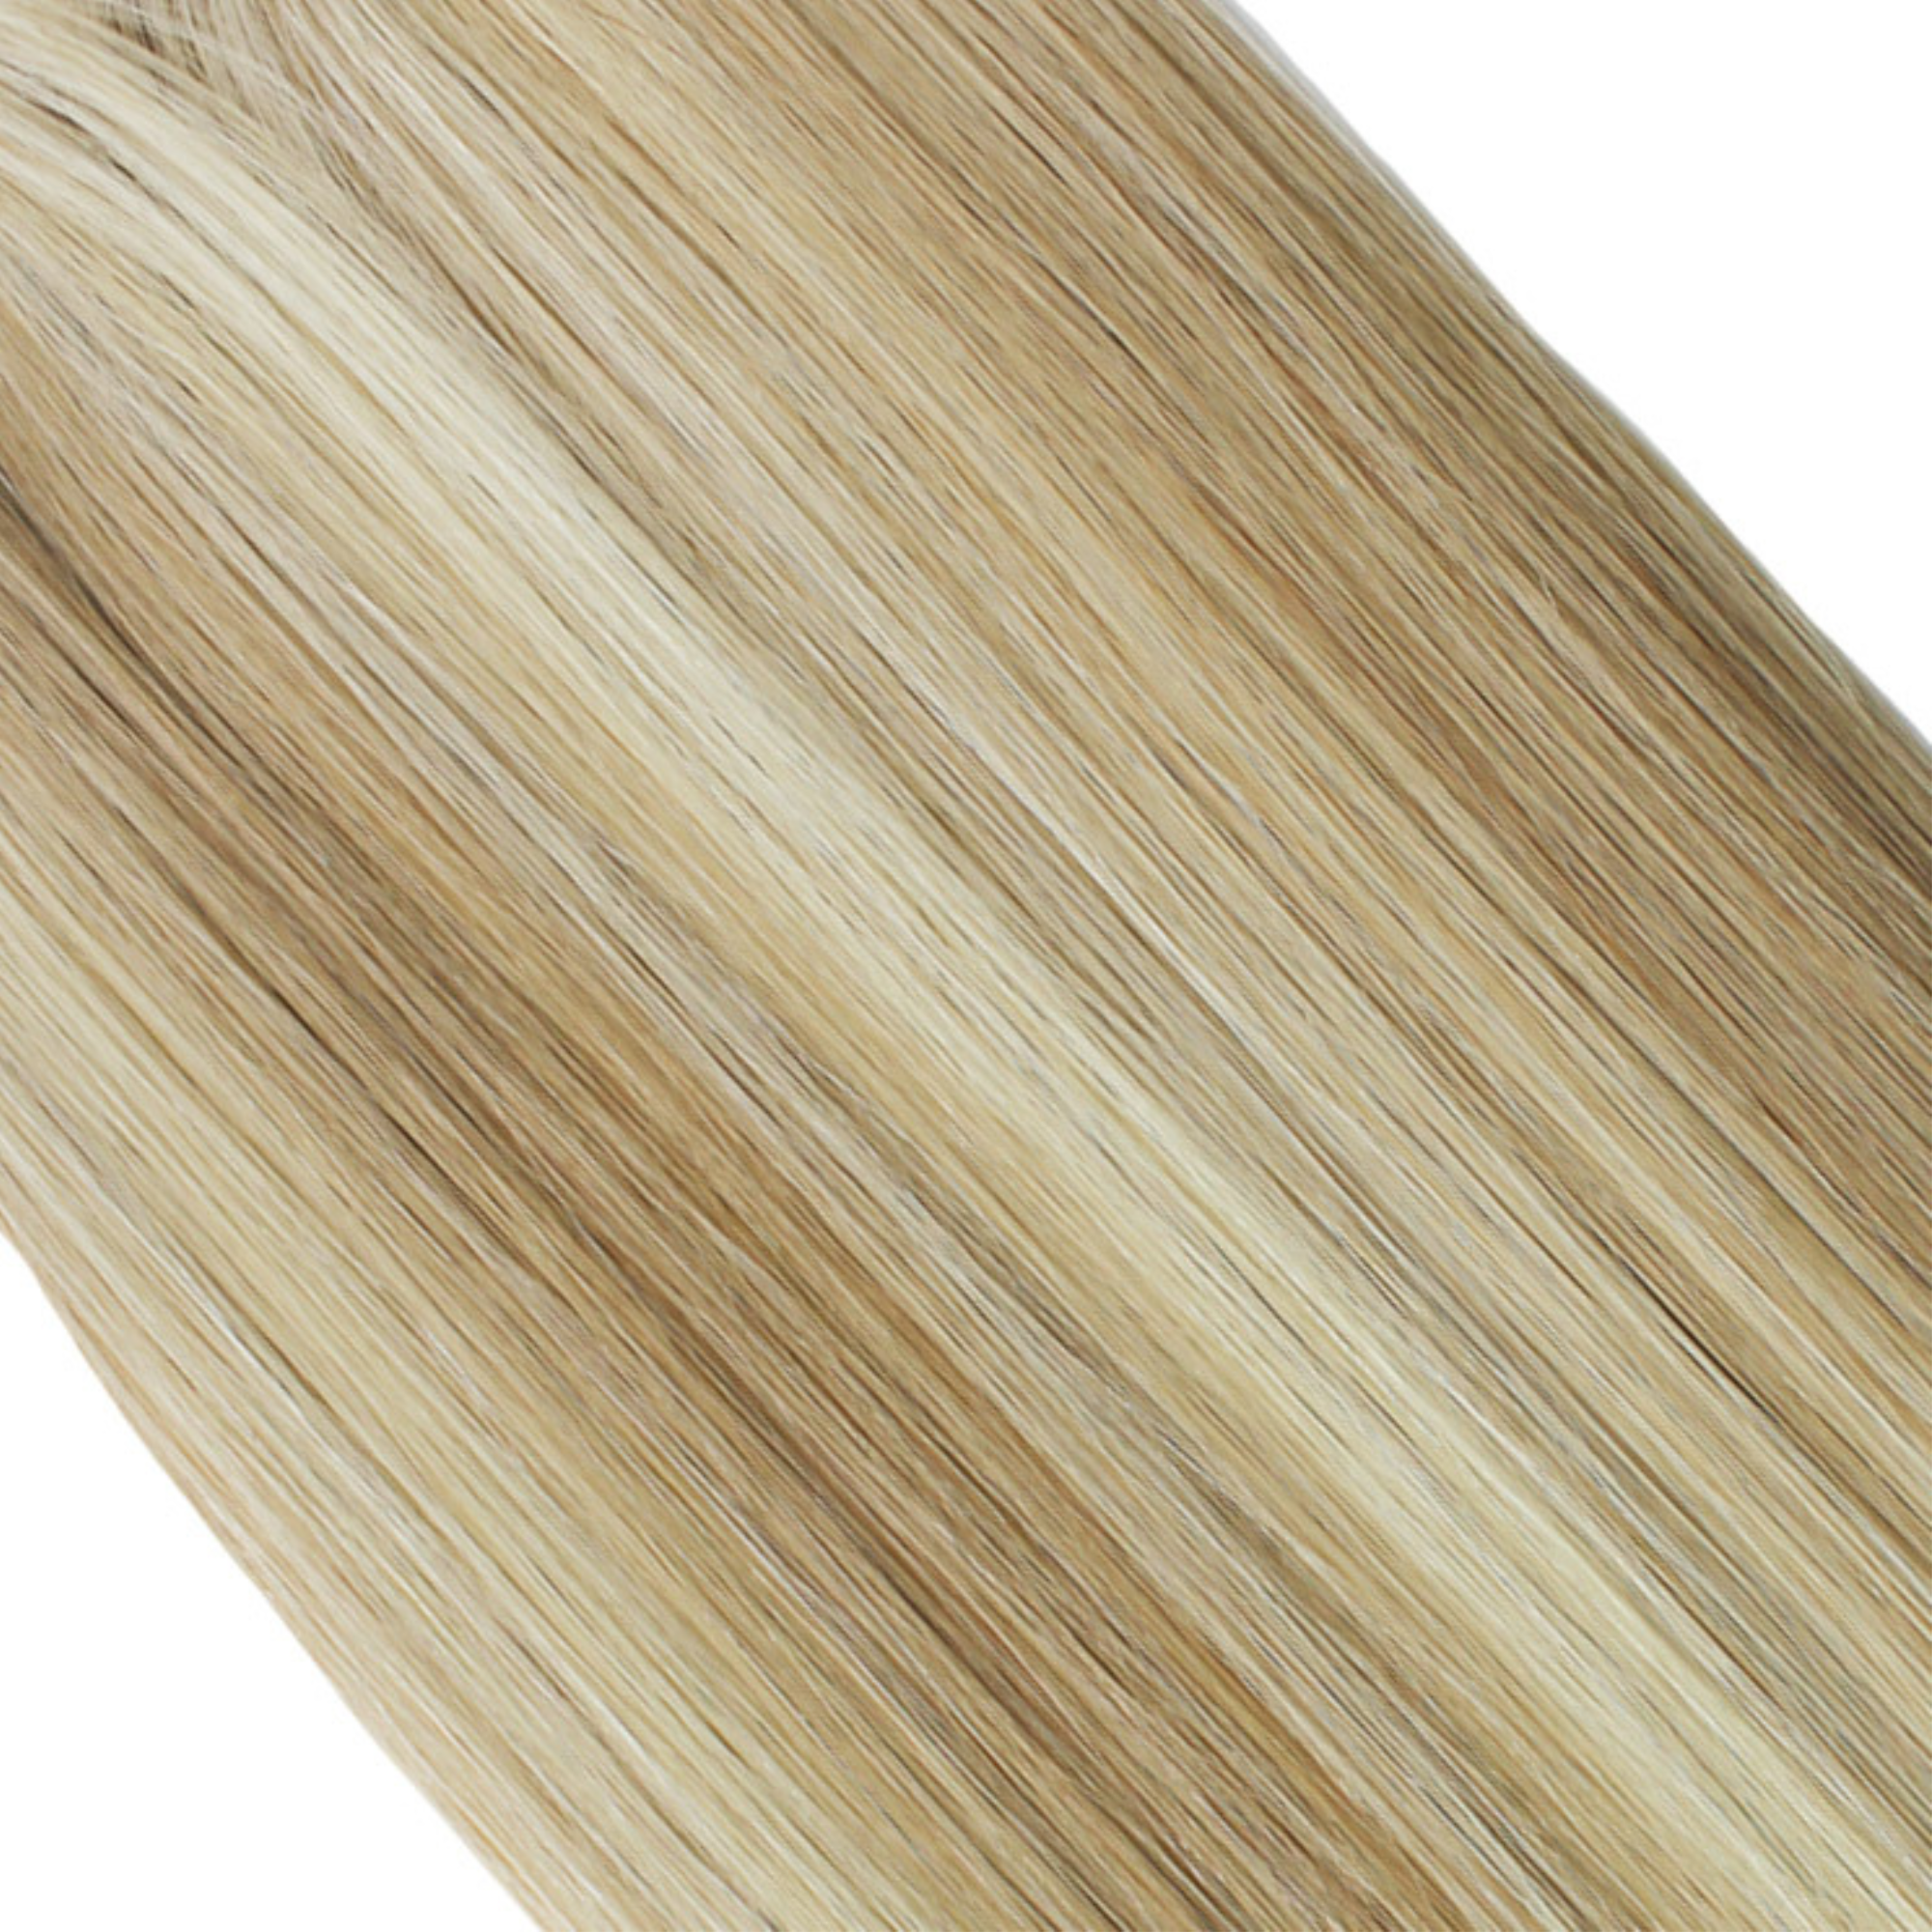 "hair rehab london 22" tape hair extensions shade swatch titled coachella blonde"